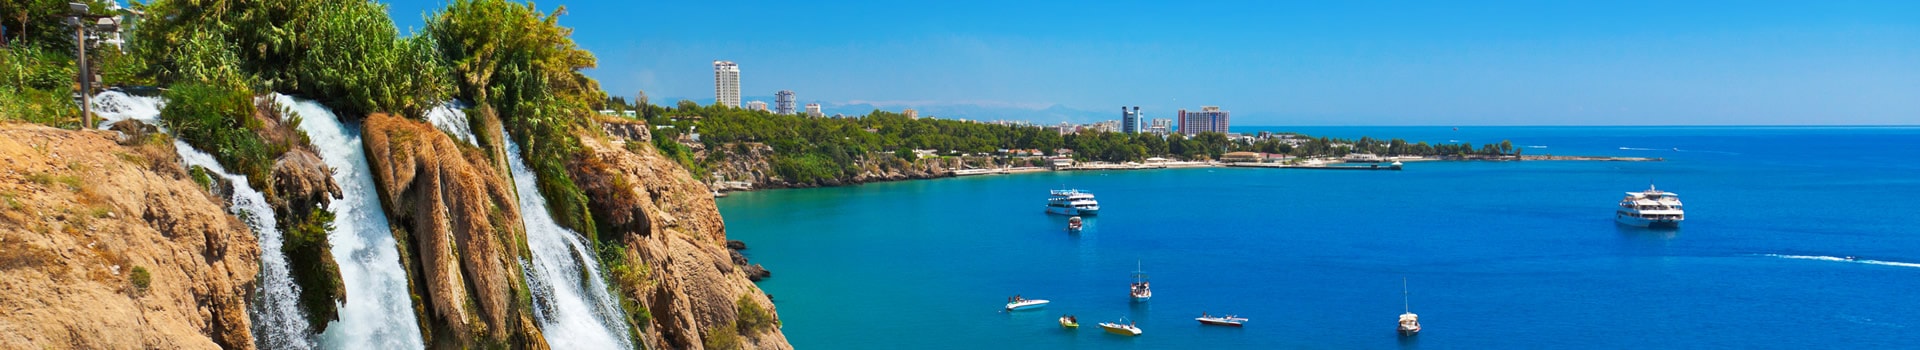 Bari - Antalya